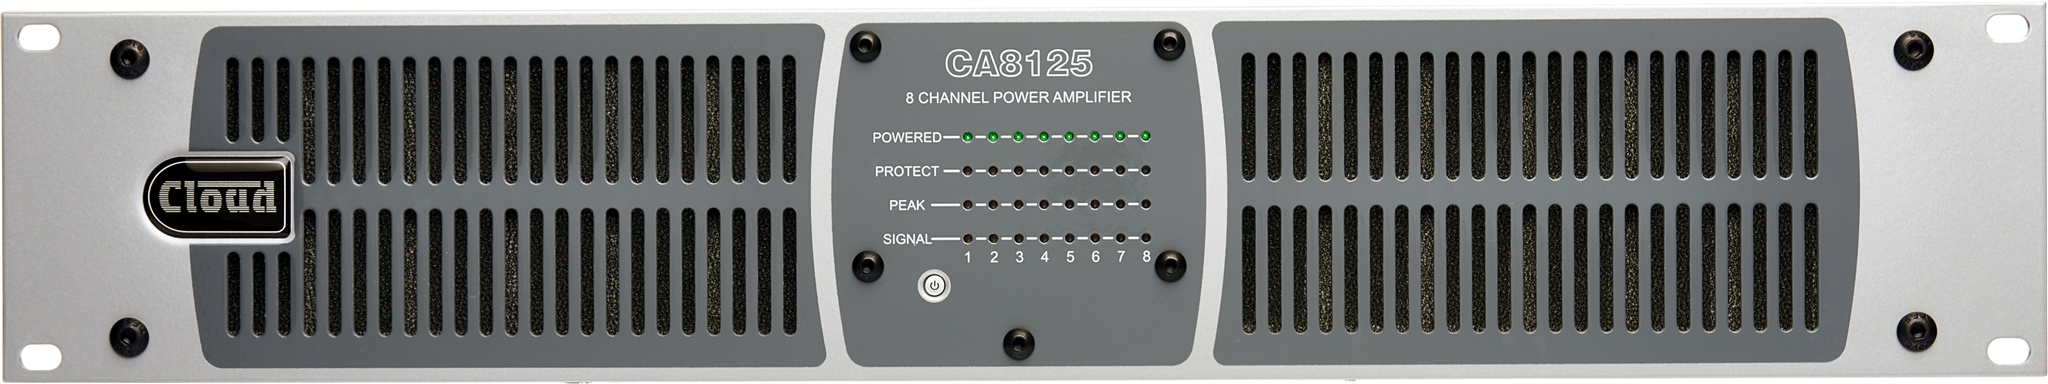 8 Channel Amplifier 125w Per Output Channel - CLOUD (ENGLAND) _ CA8125